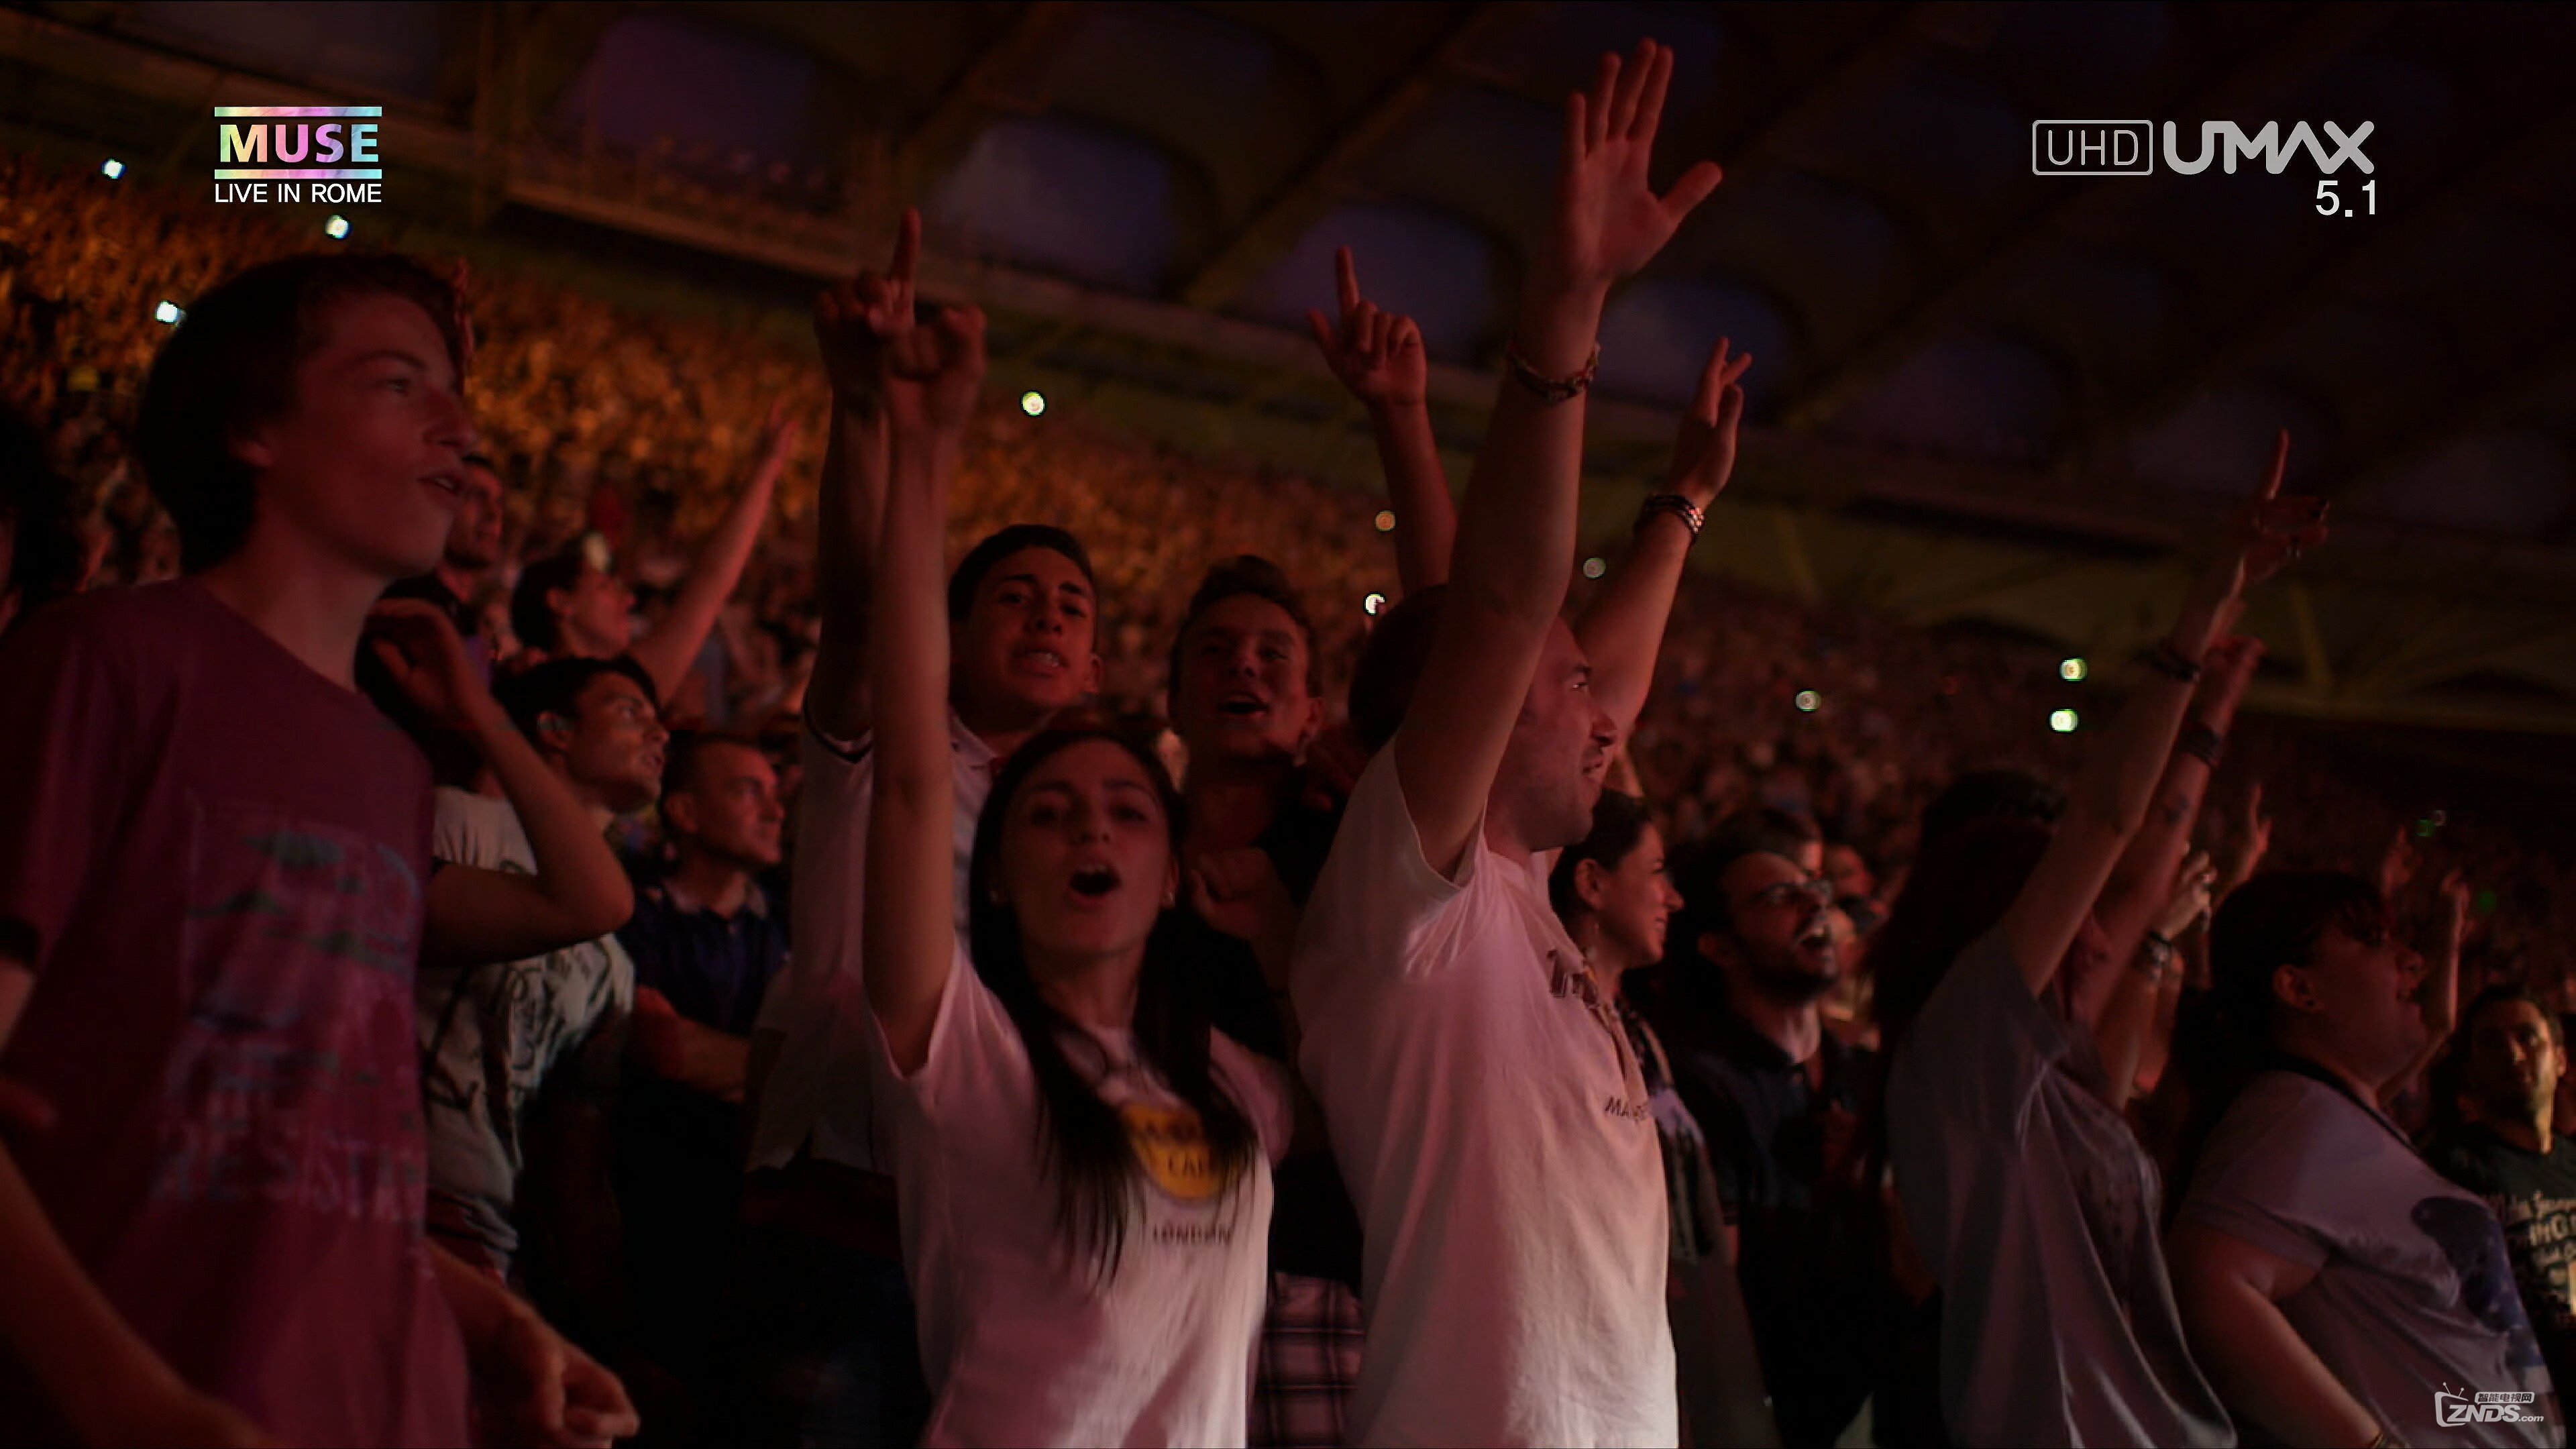 Muse.Live.At.Rome.Olympic.Stadium.2013.2160p.UHDTV.HEVC.mkv_20160313_001915.609.jpg